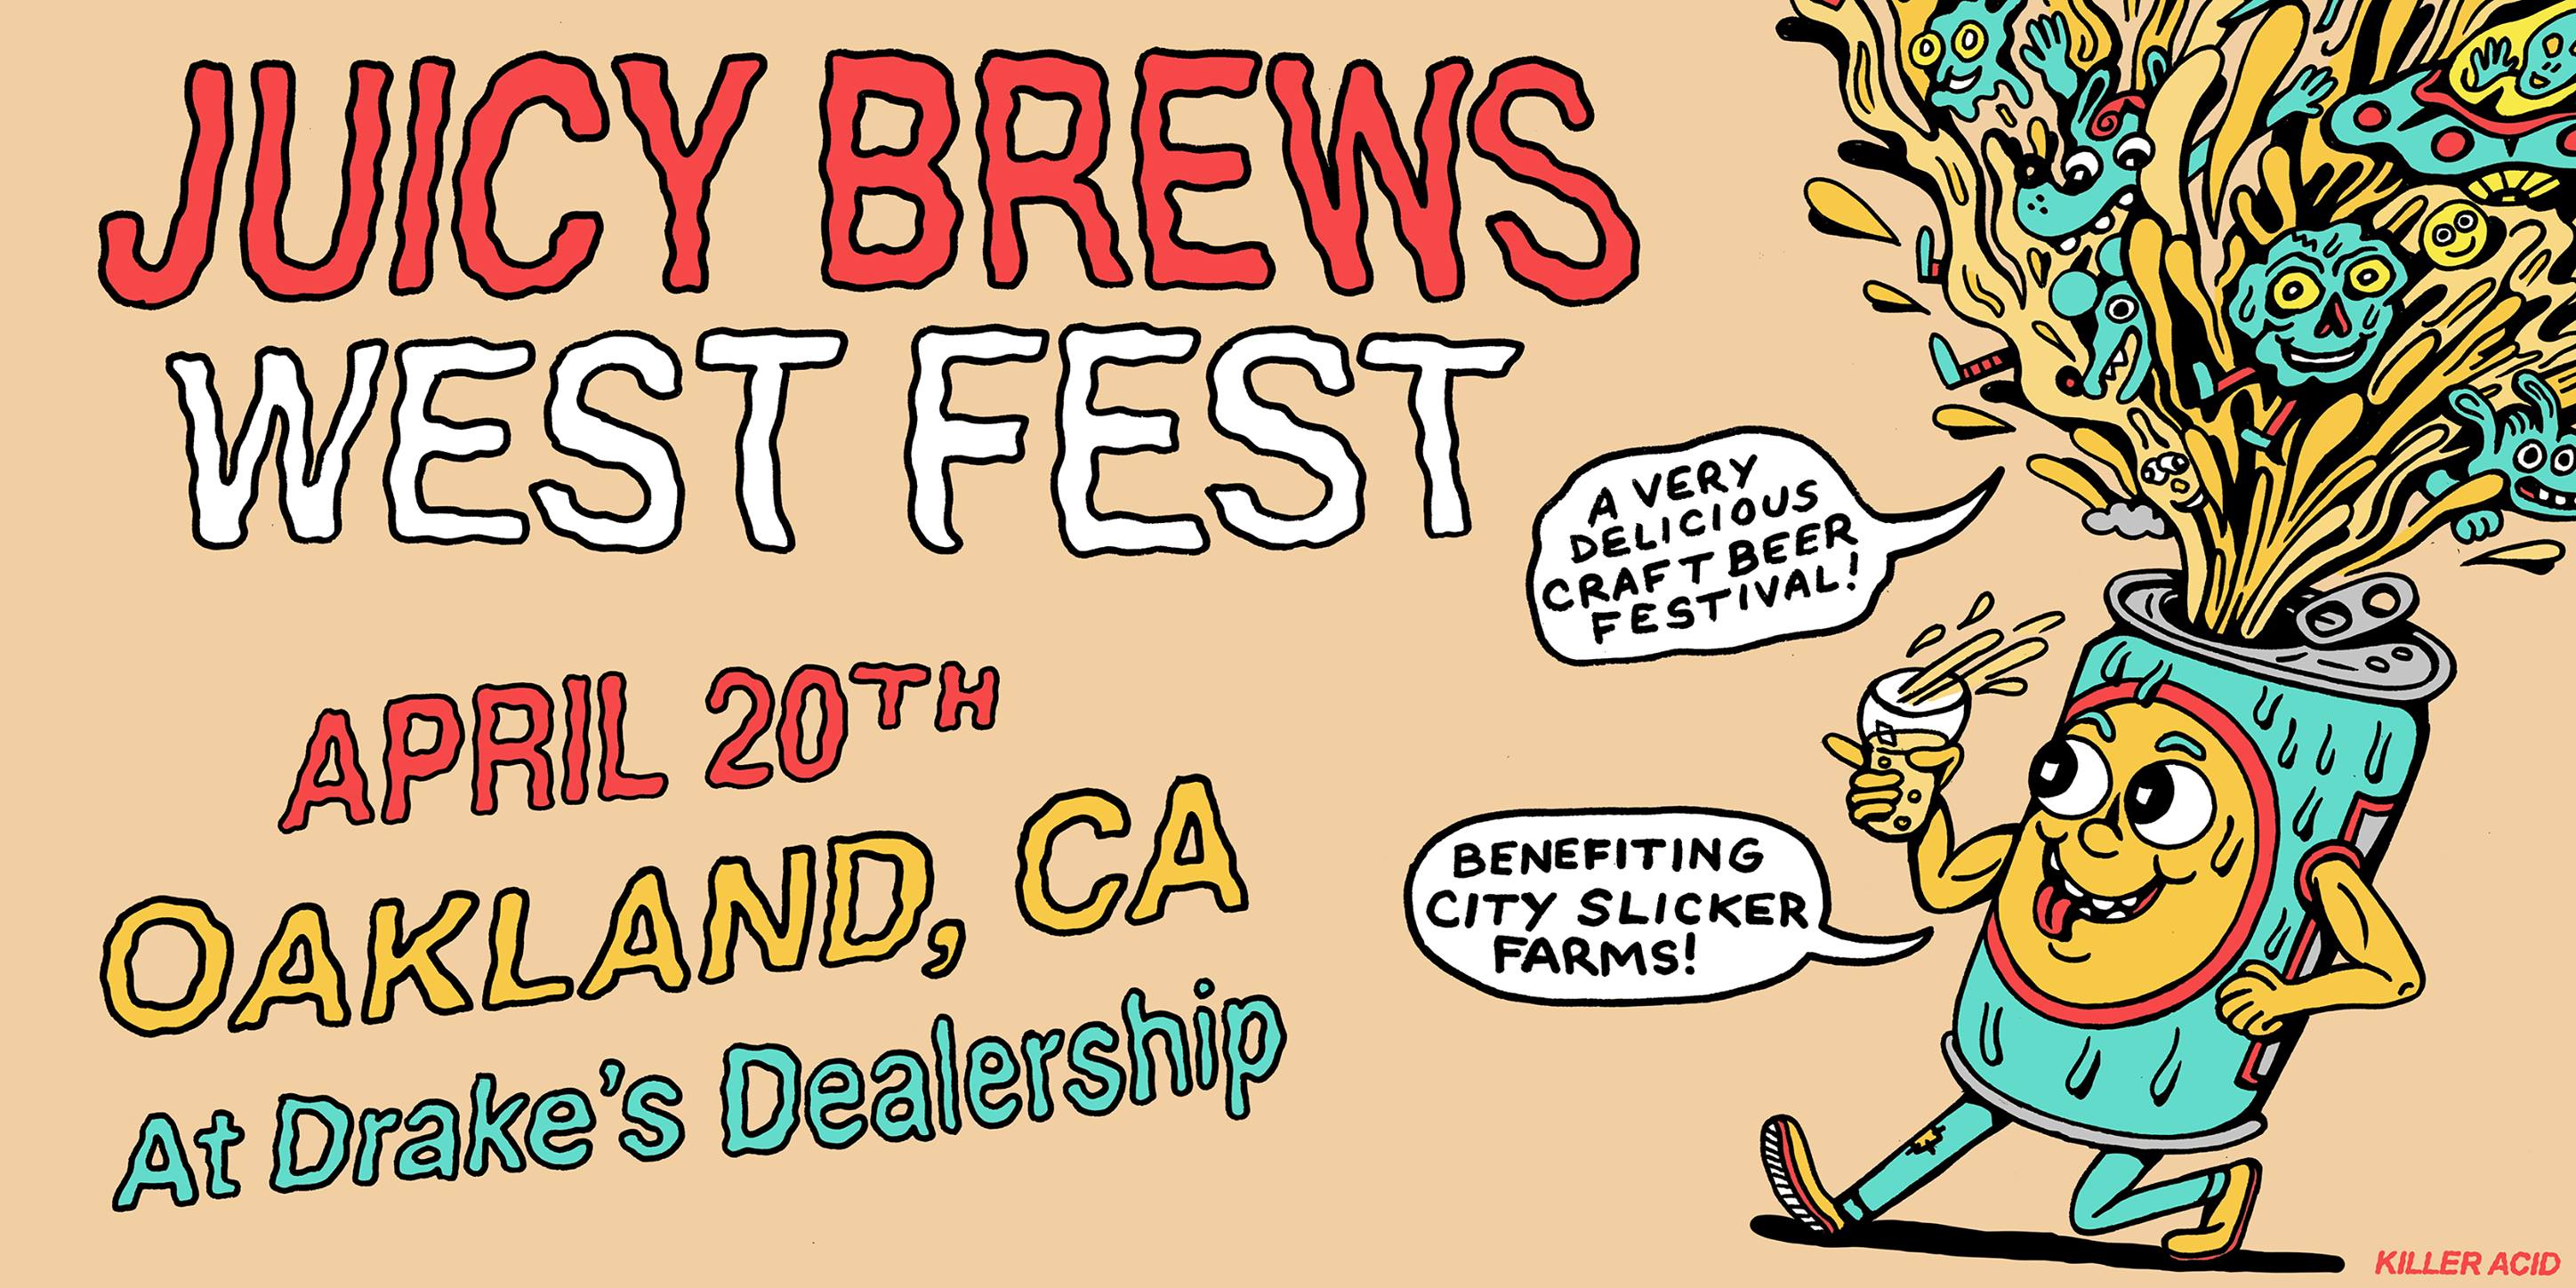 We Teamed up with Drake’s for Juicy Brews WestFest Beer Festival